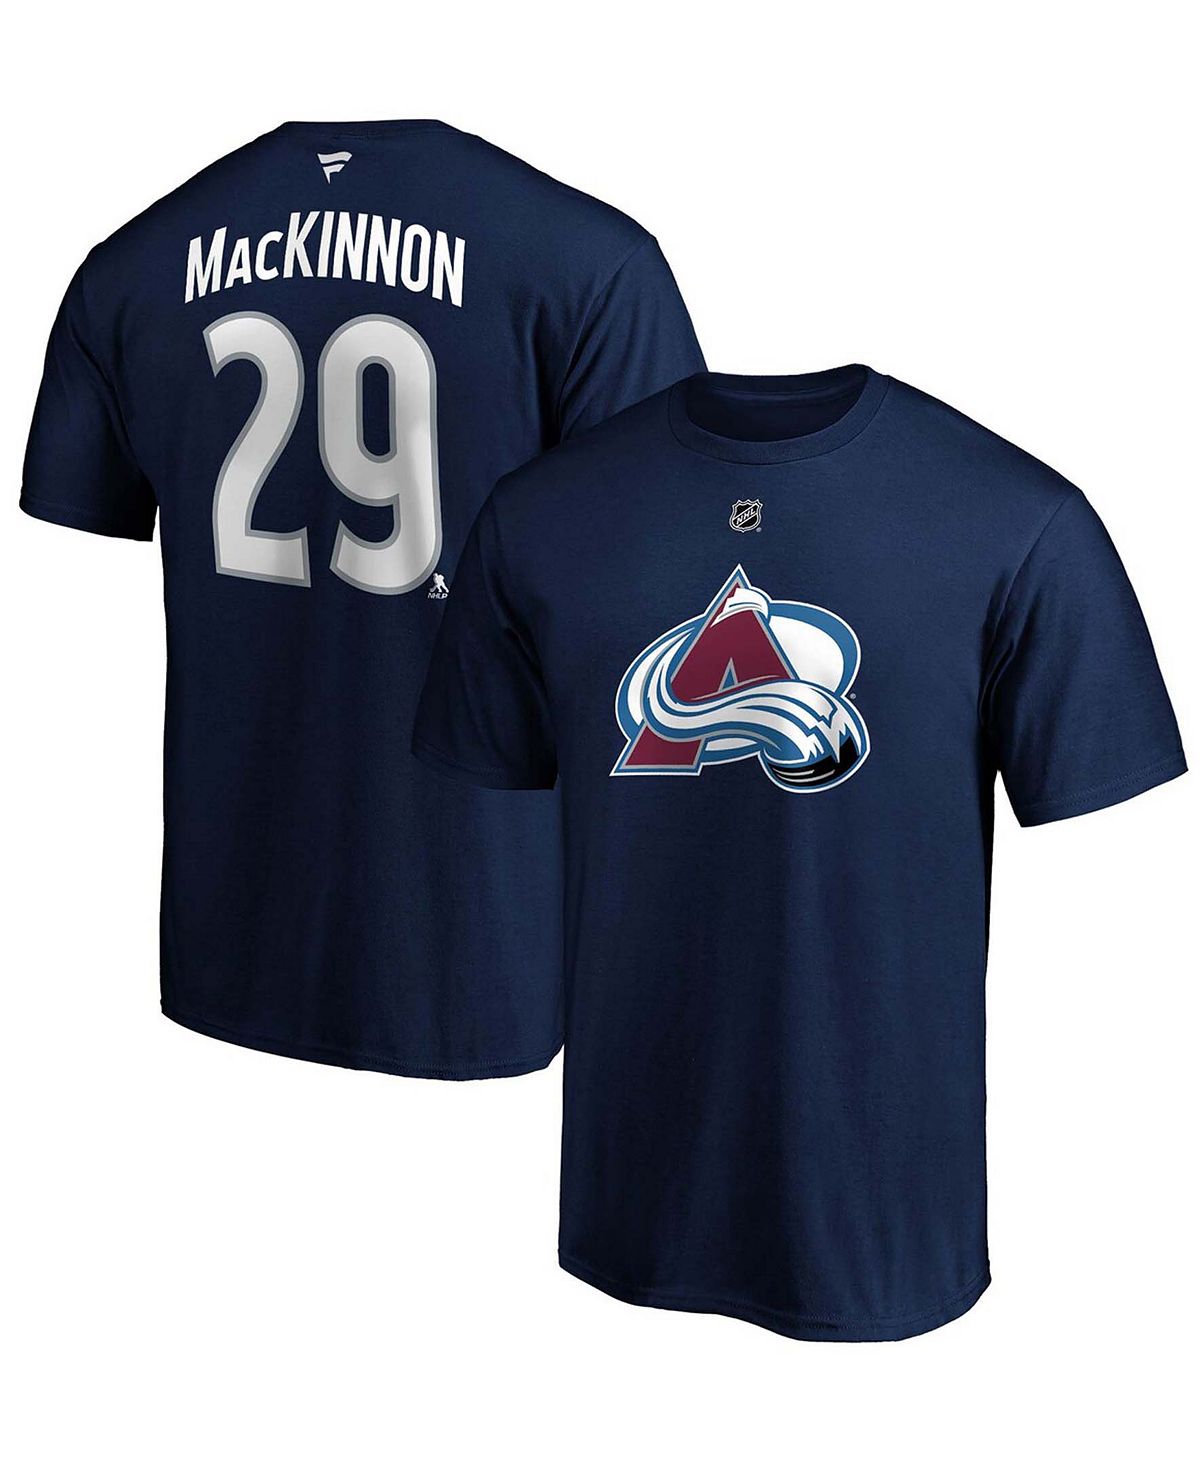 Мужская футболка nathan mackinnon navy colorado avalanche authentic stack name number Fanatics, синий